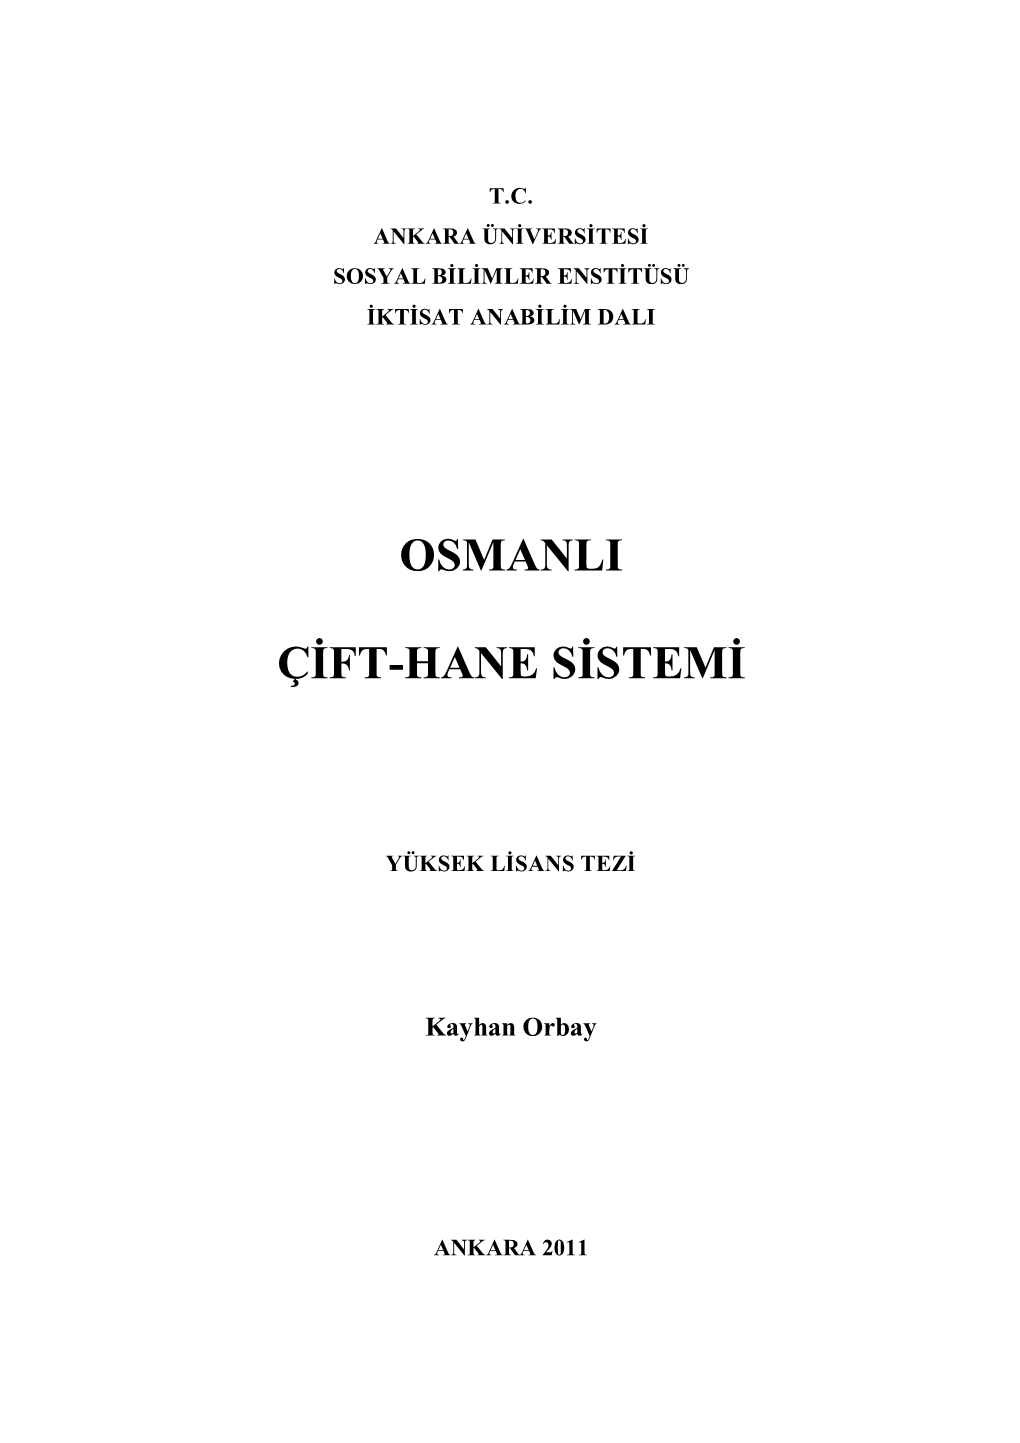 Osmanli Çift-Hane Sistemi